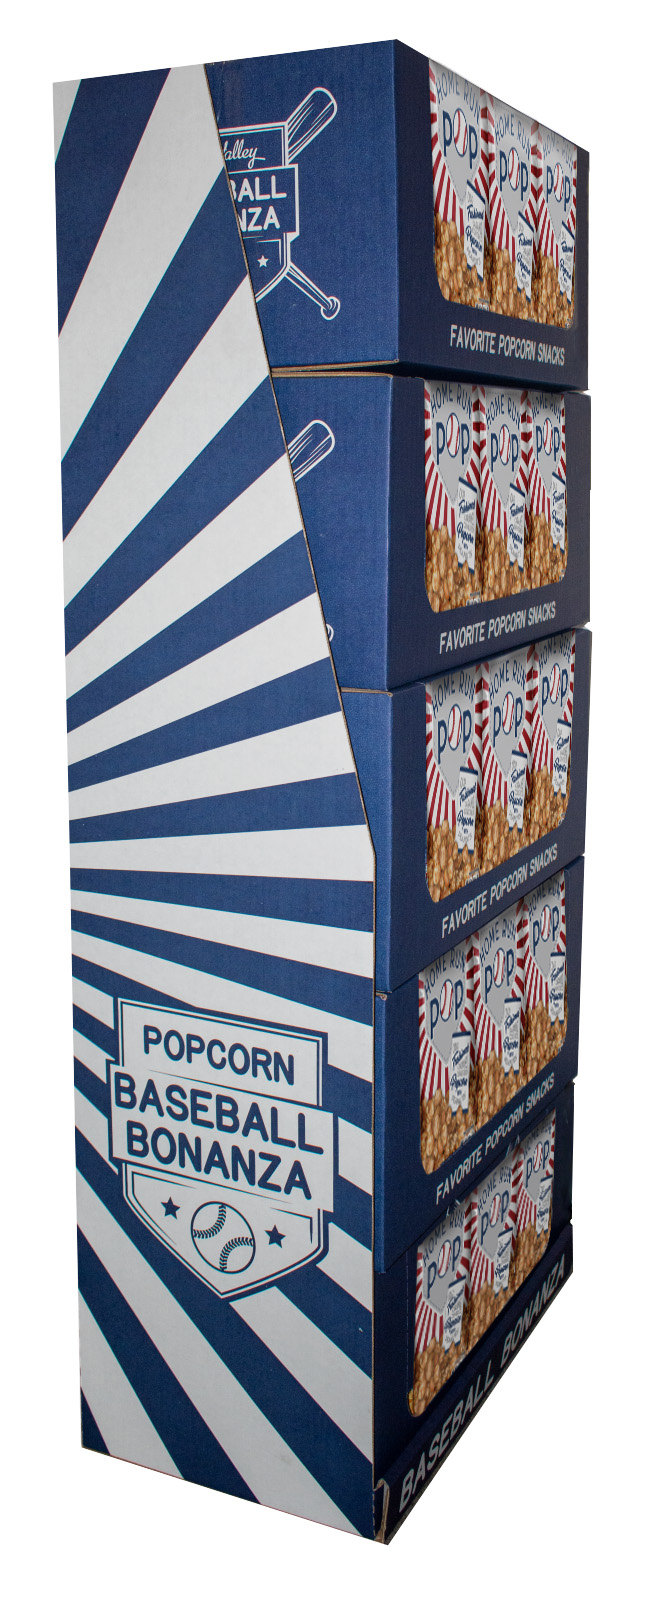 Baseball Popcorn Bonanza Pop Display